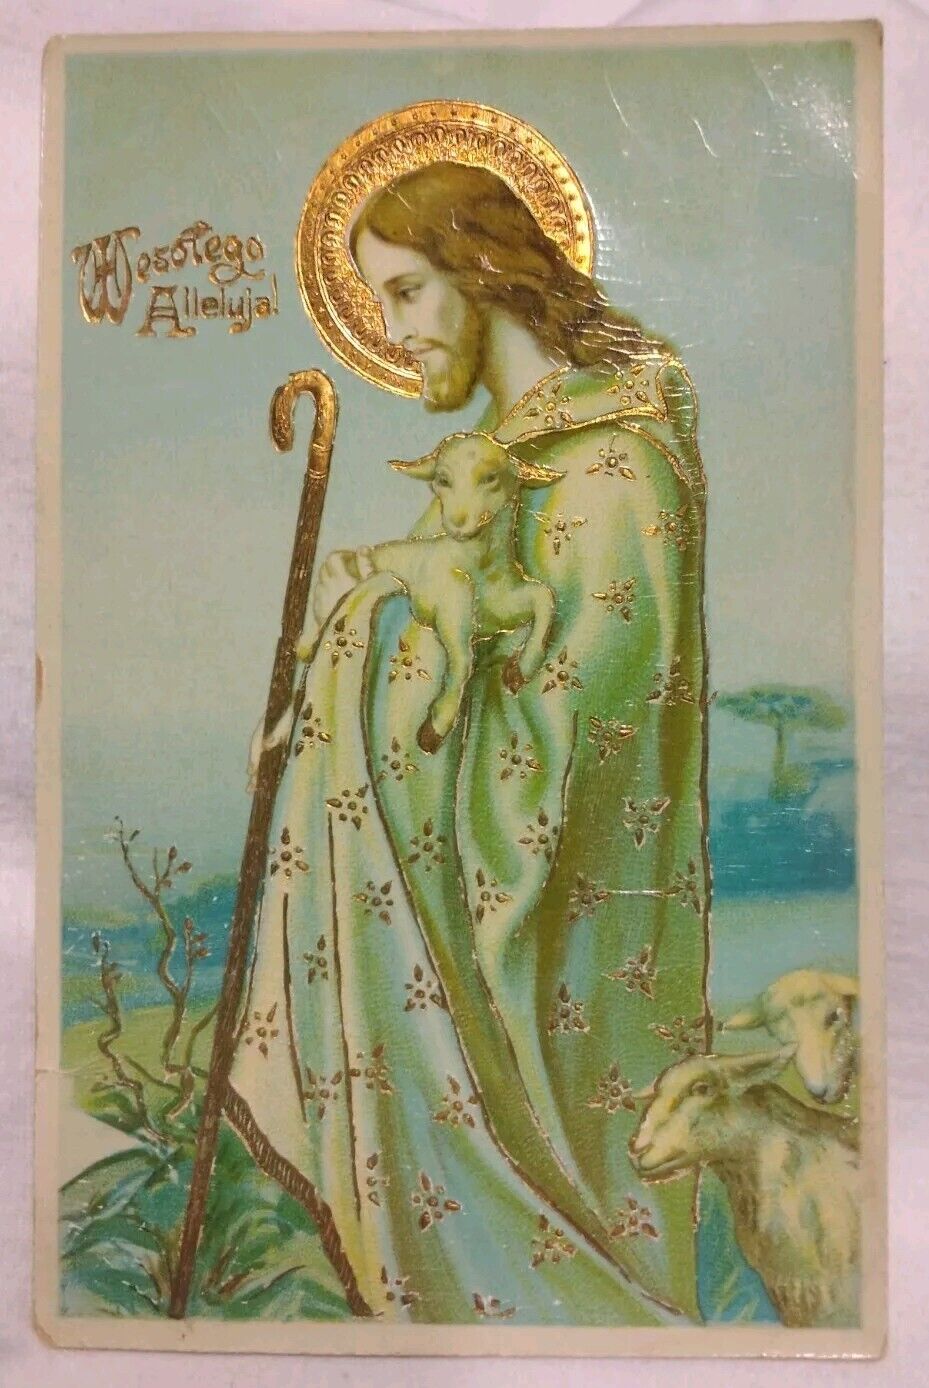 Wesotego Alleluja Happy Easter Jesus With Lambs Vintage Postcard 